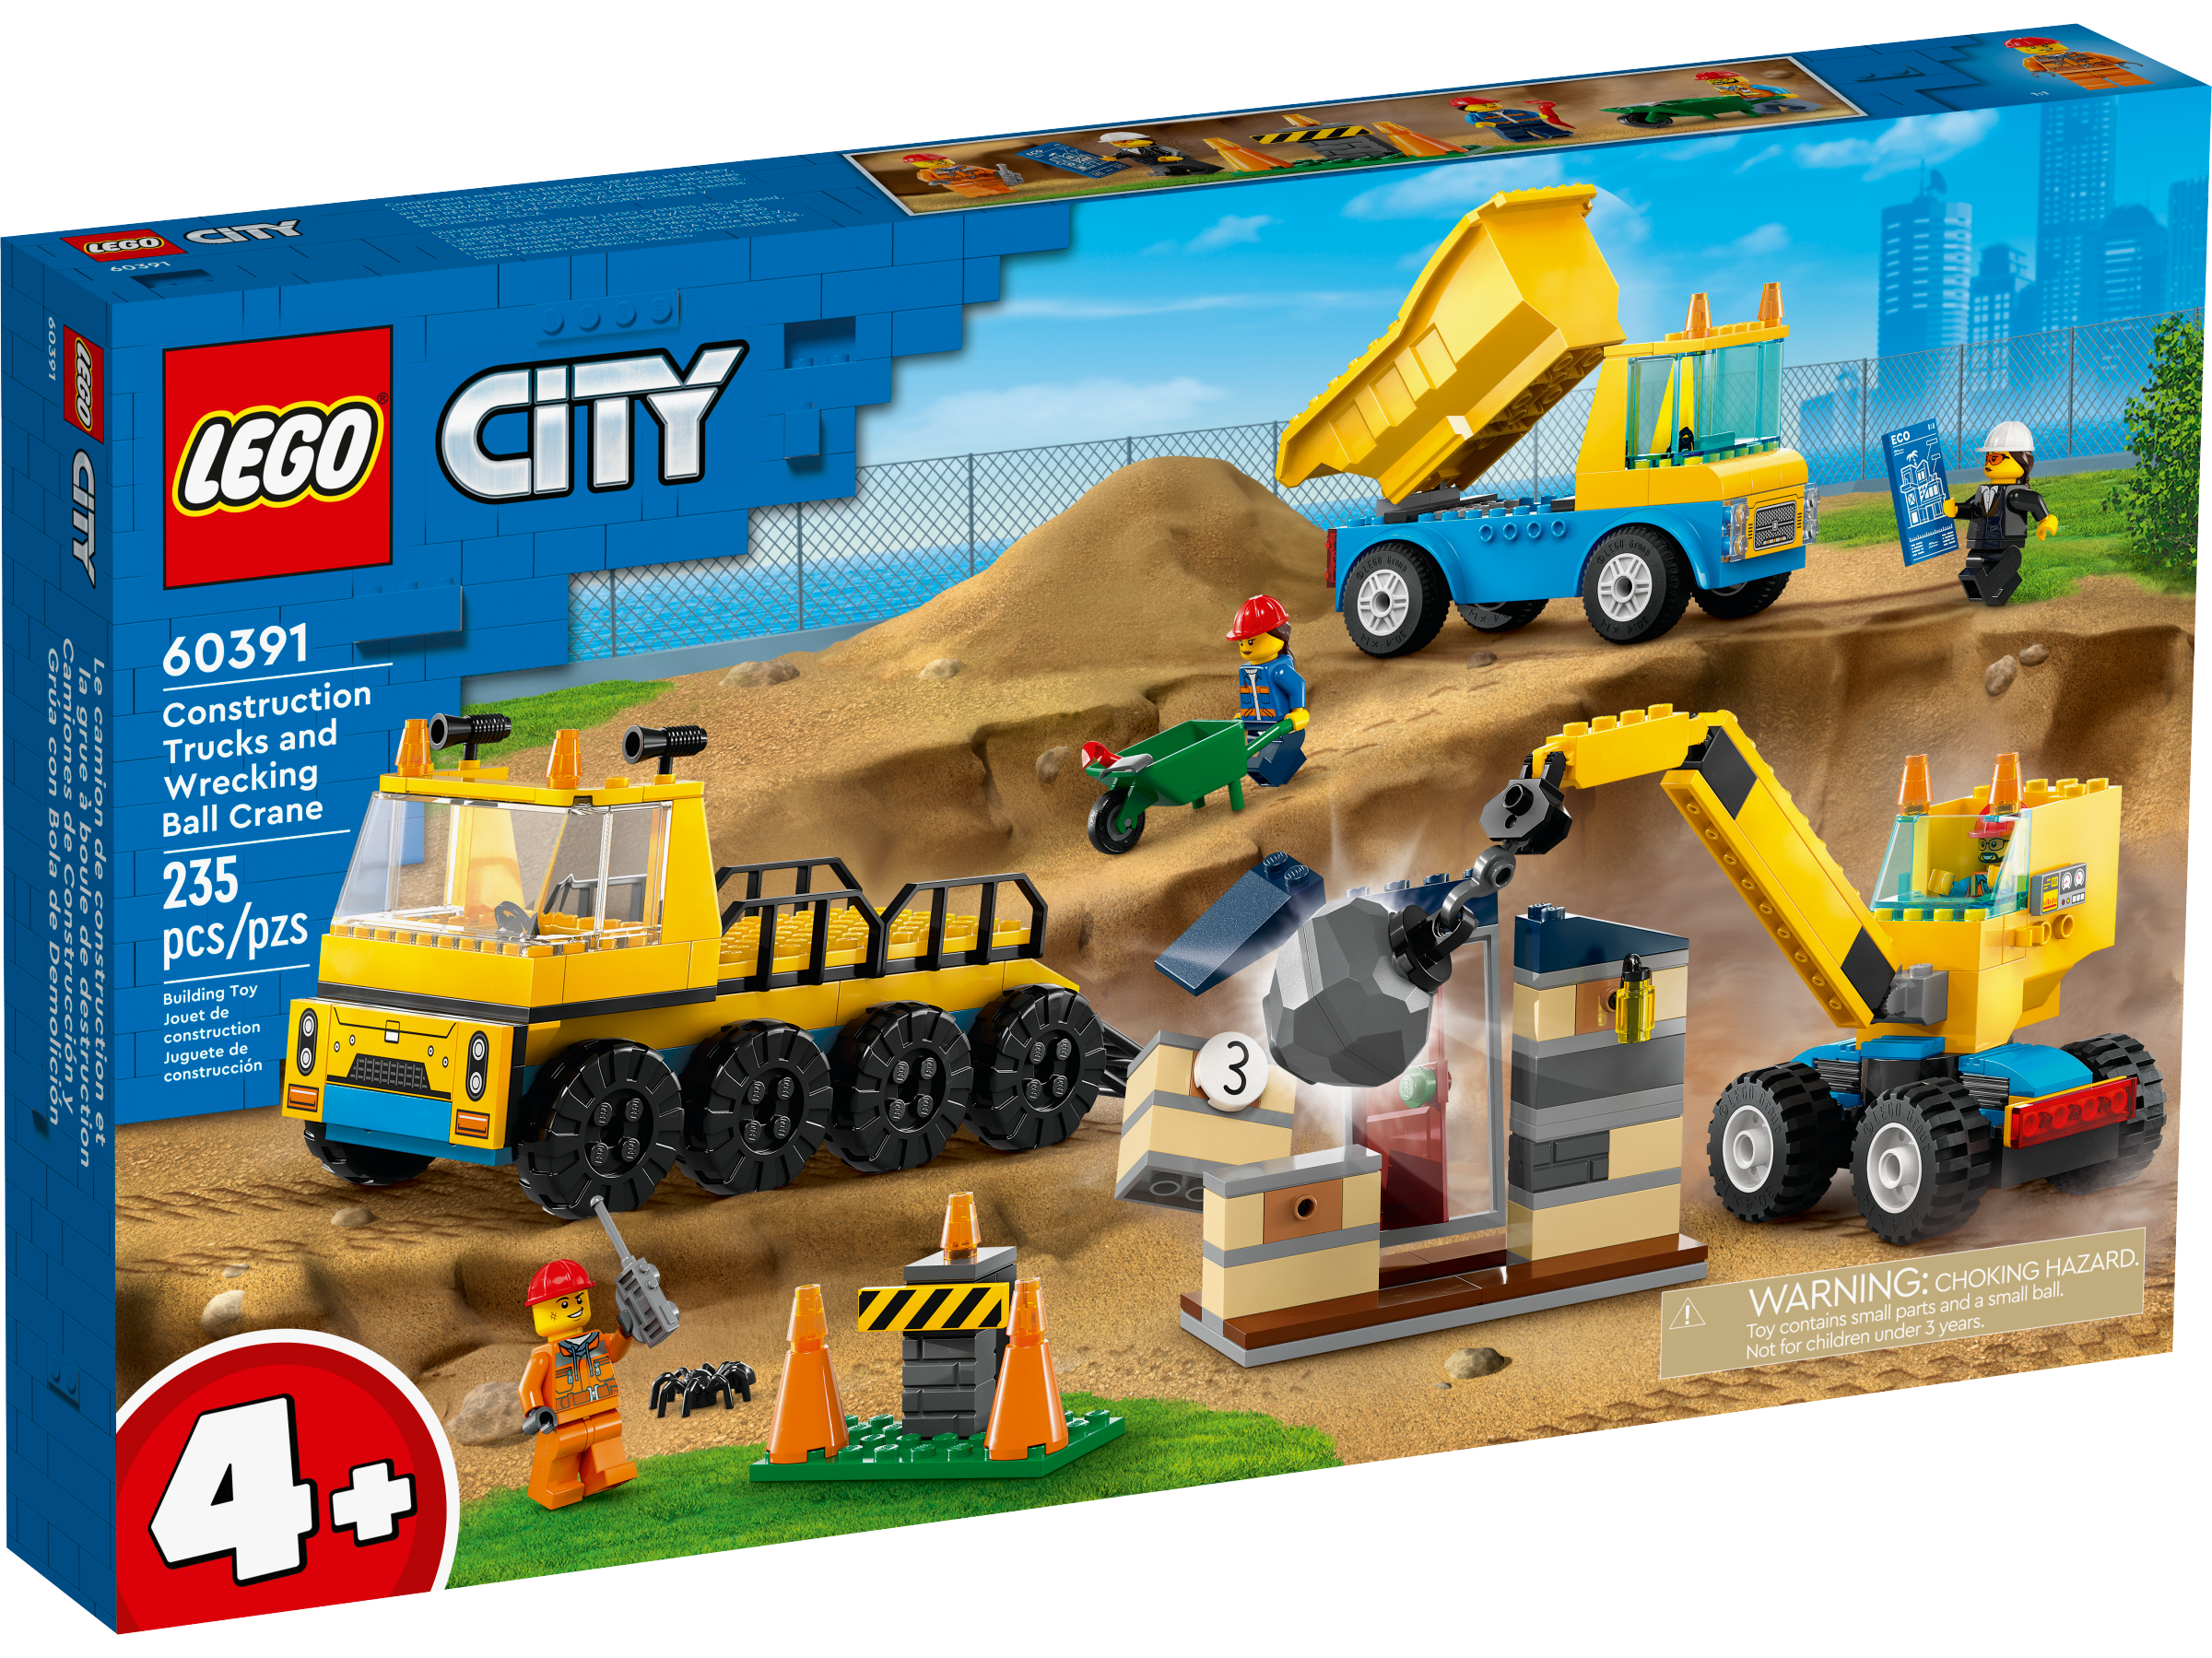 Construction Trucks and Wrecking Ball Crane 60391, City